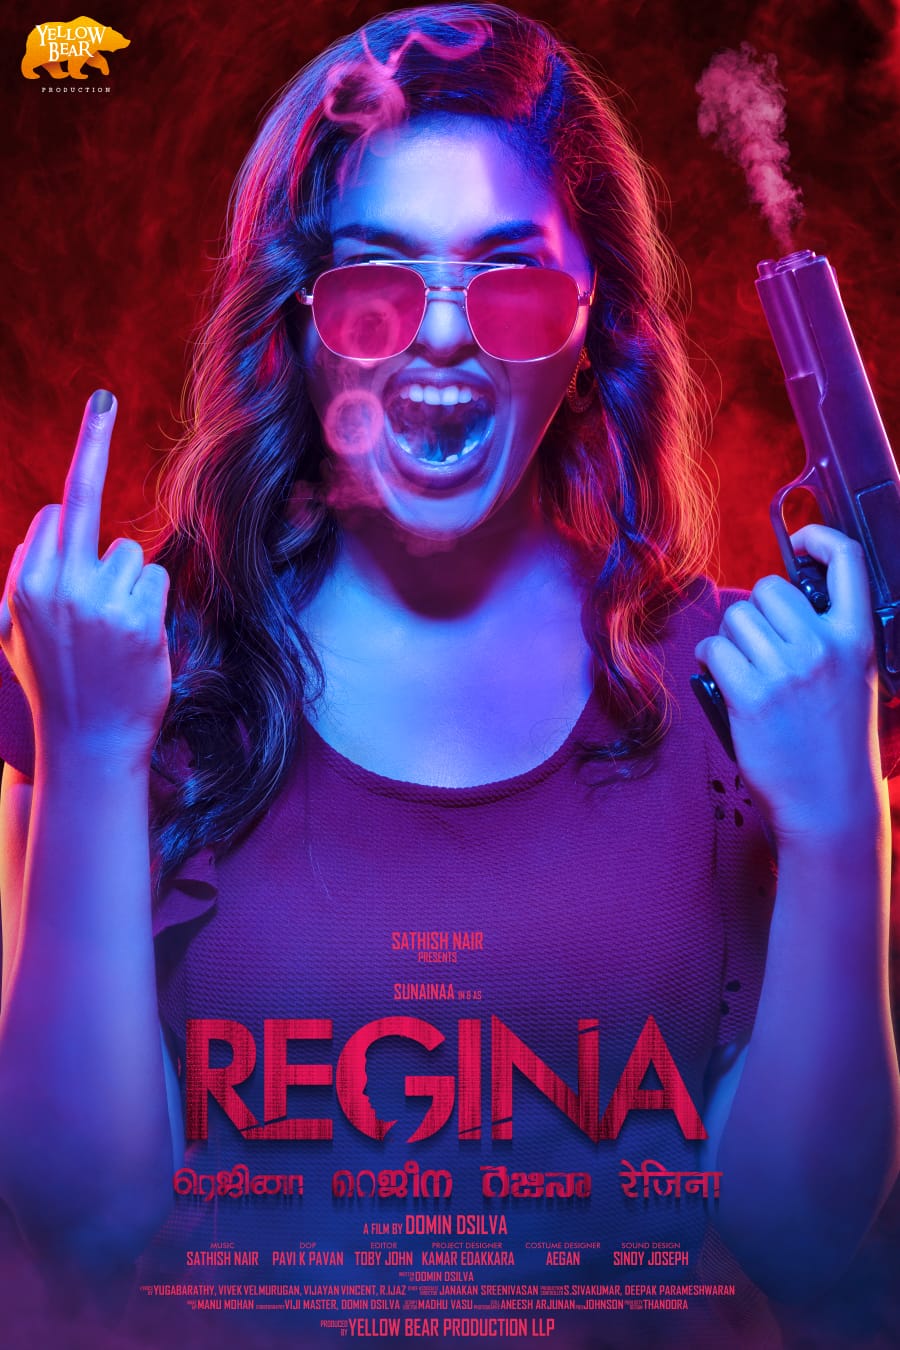 Here's the first look poster of Sunainaa starrer Regina.